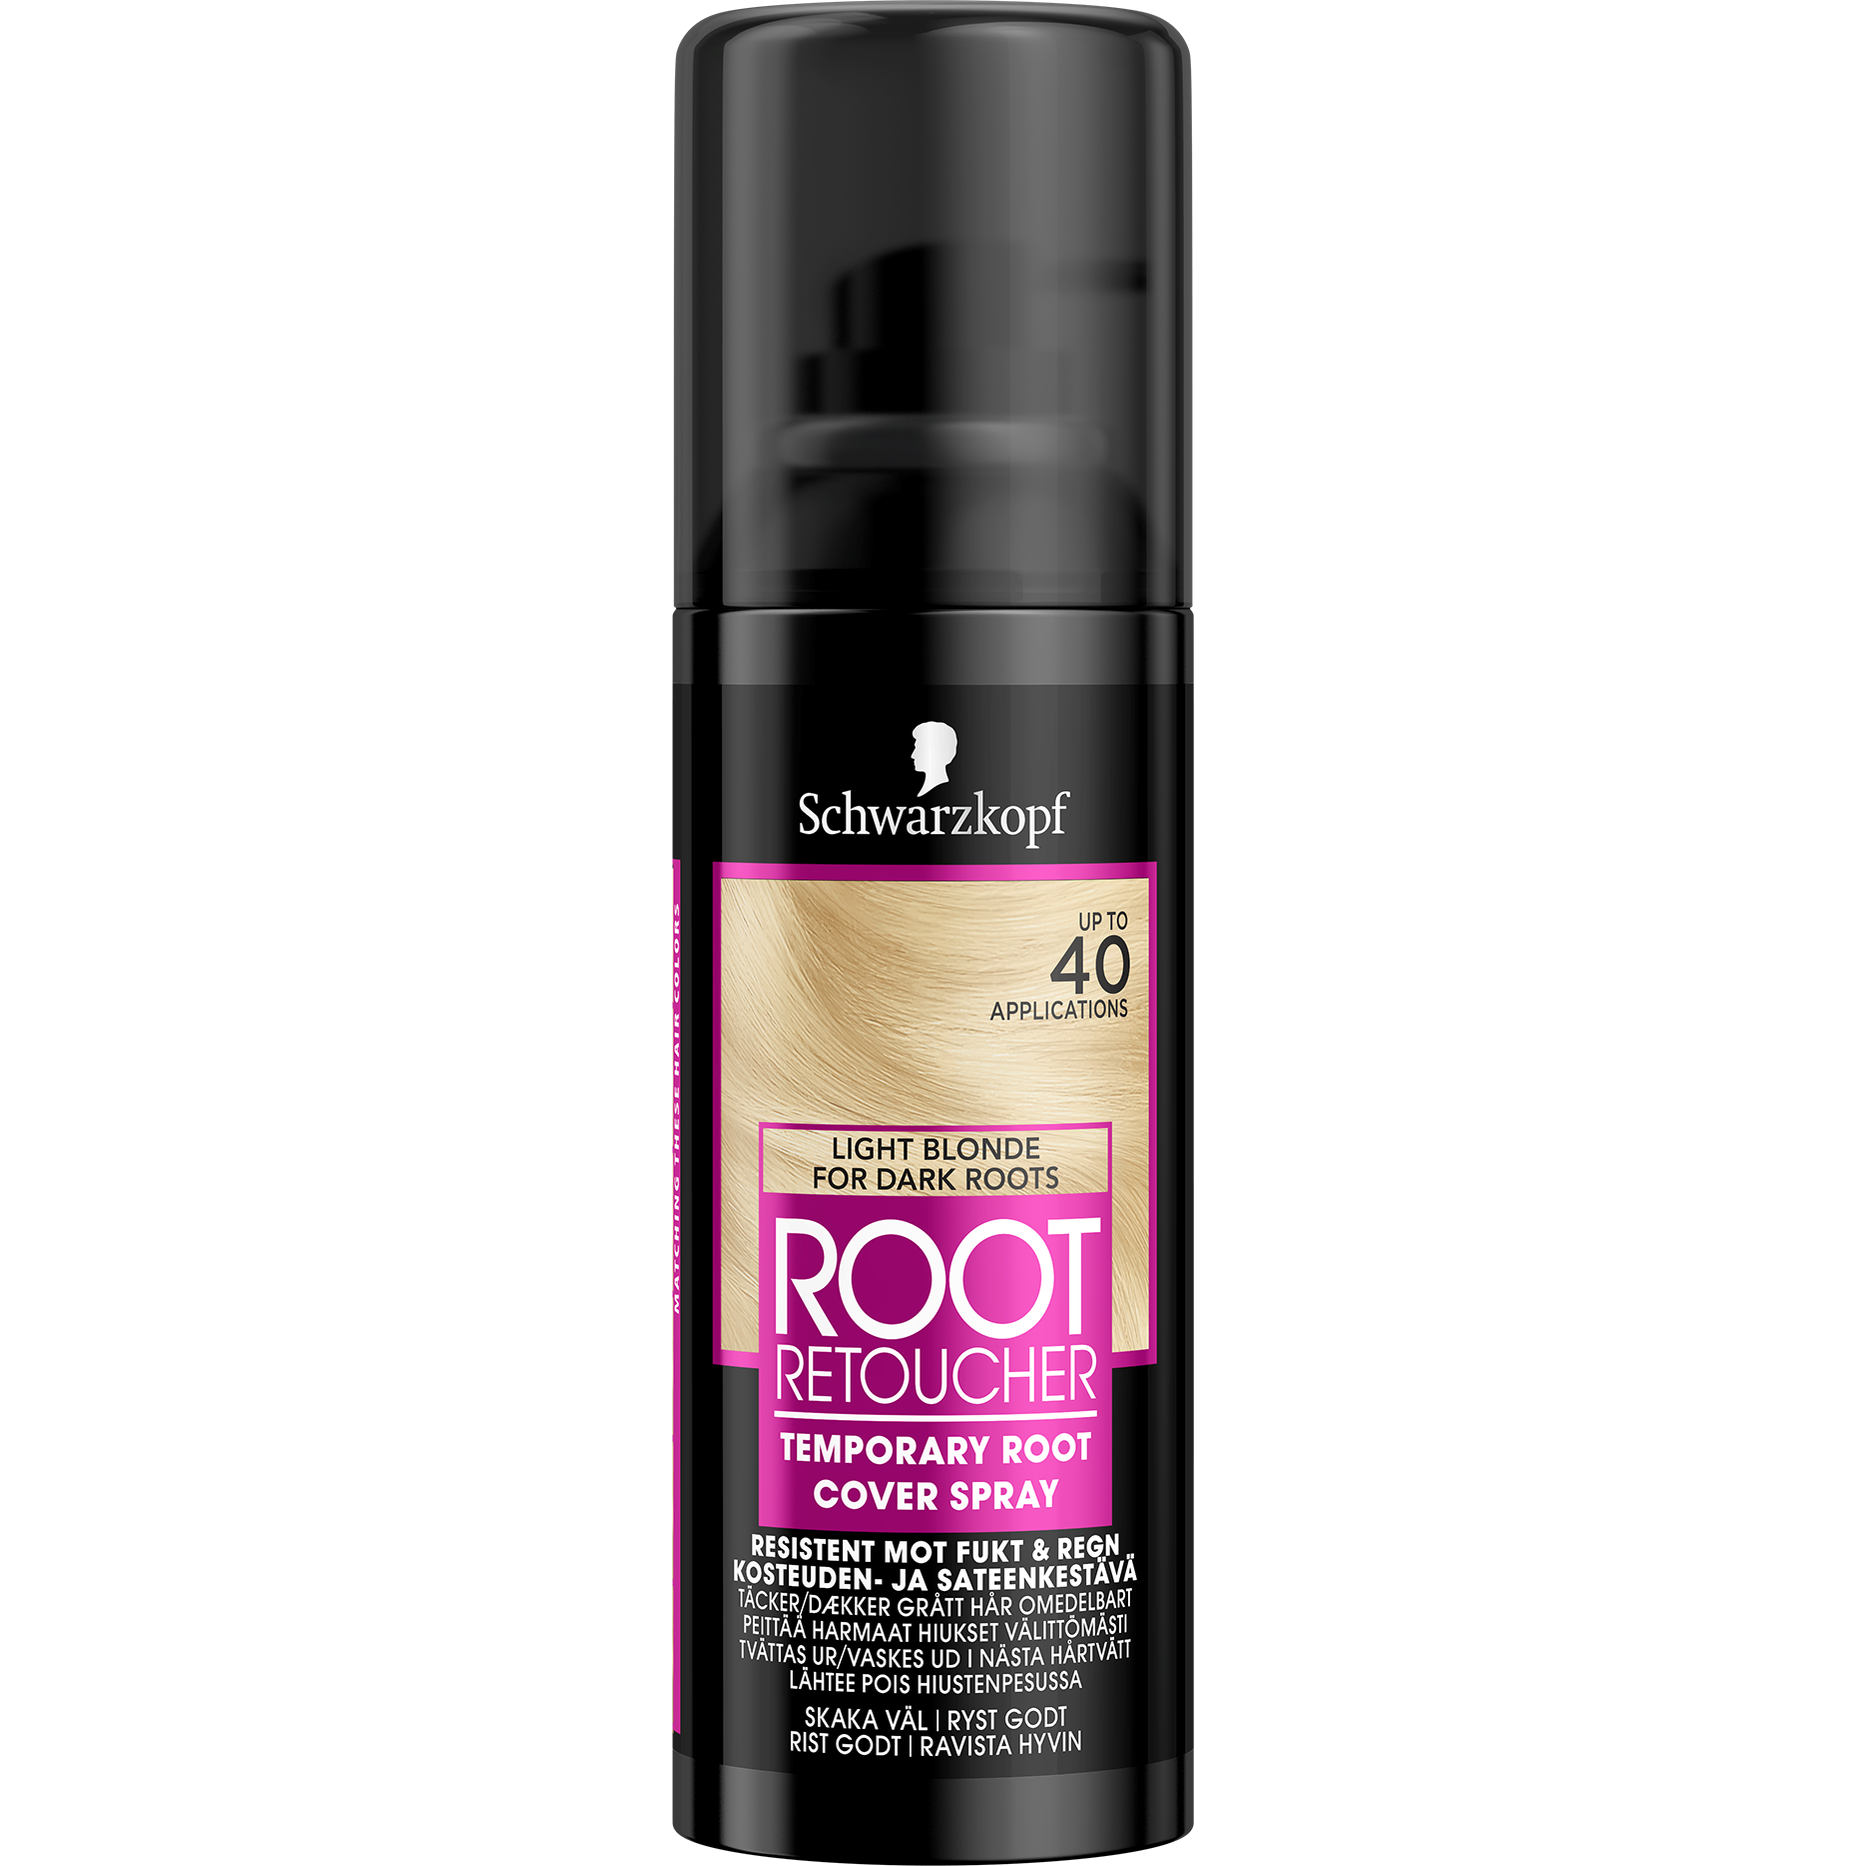 Schwarzkopf Root Retoucher Root Cover Spray Light Blonde for Dark Root